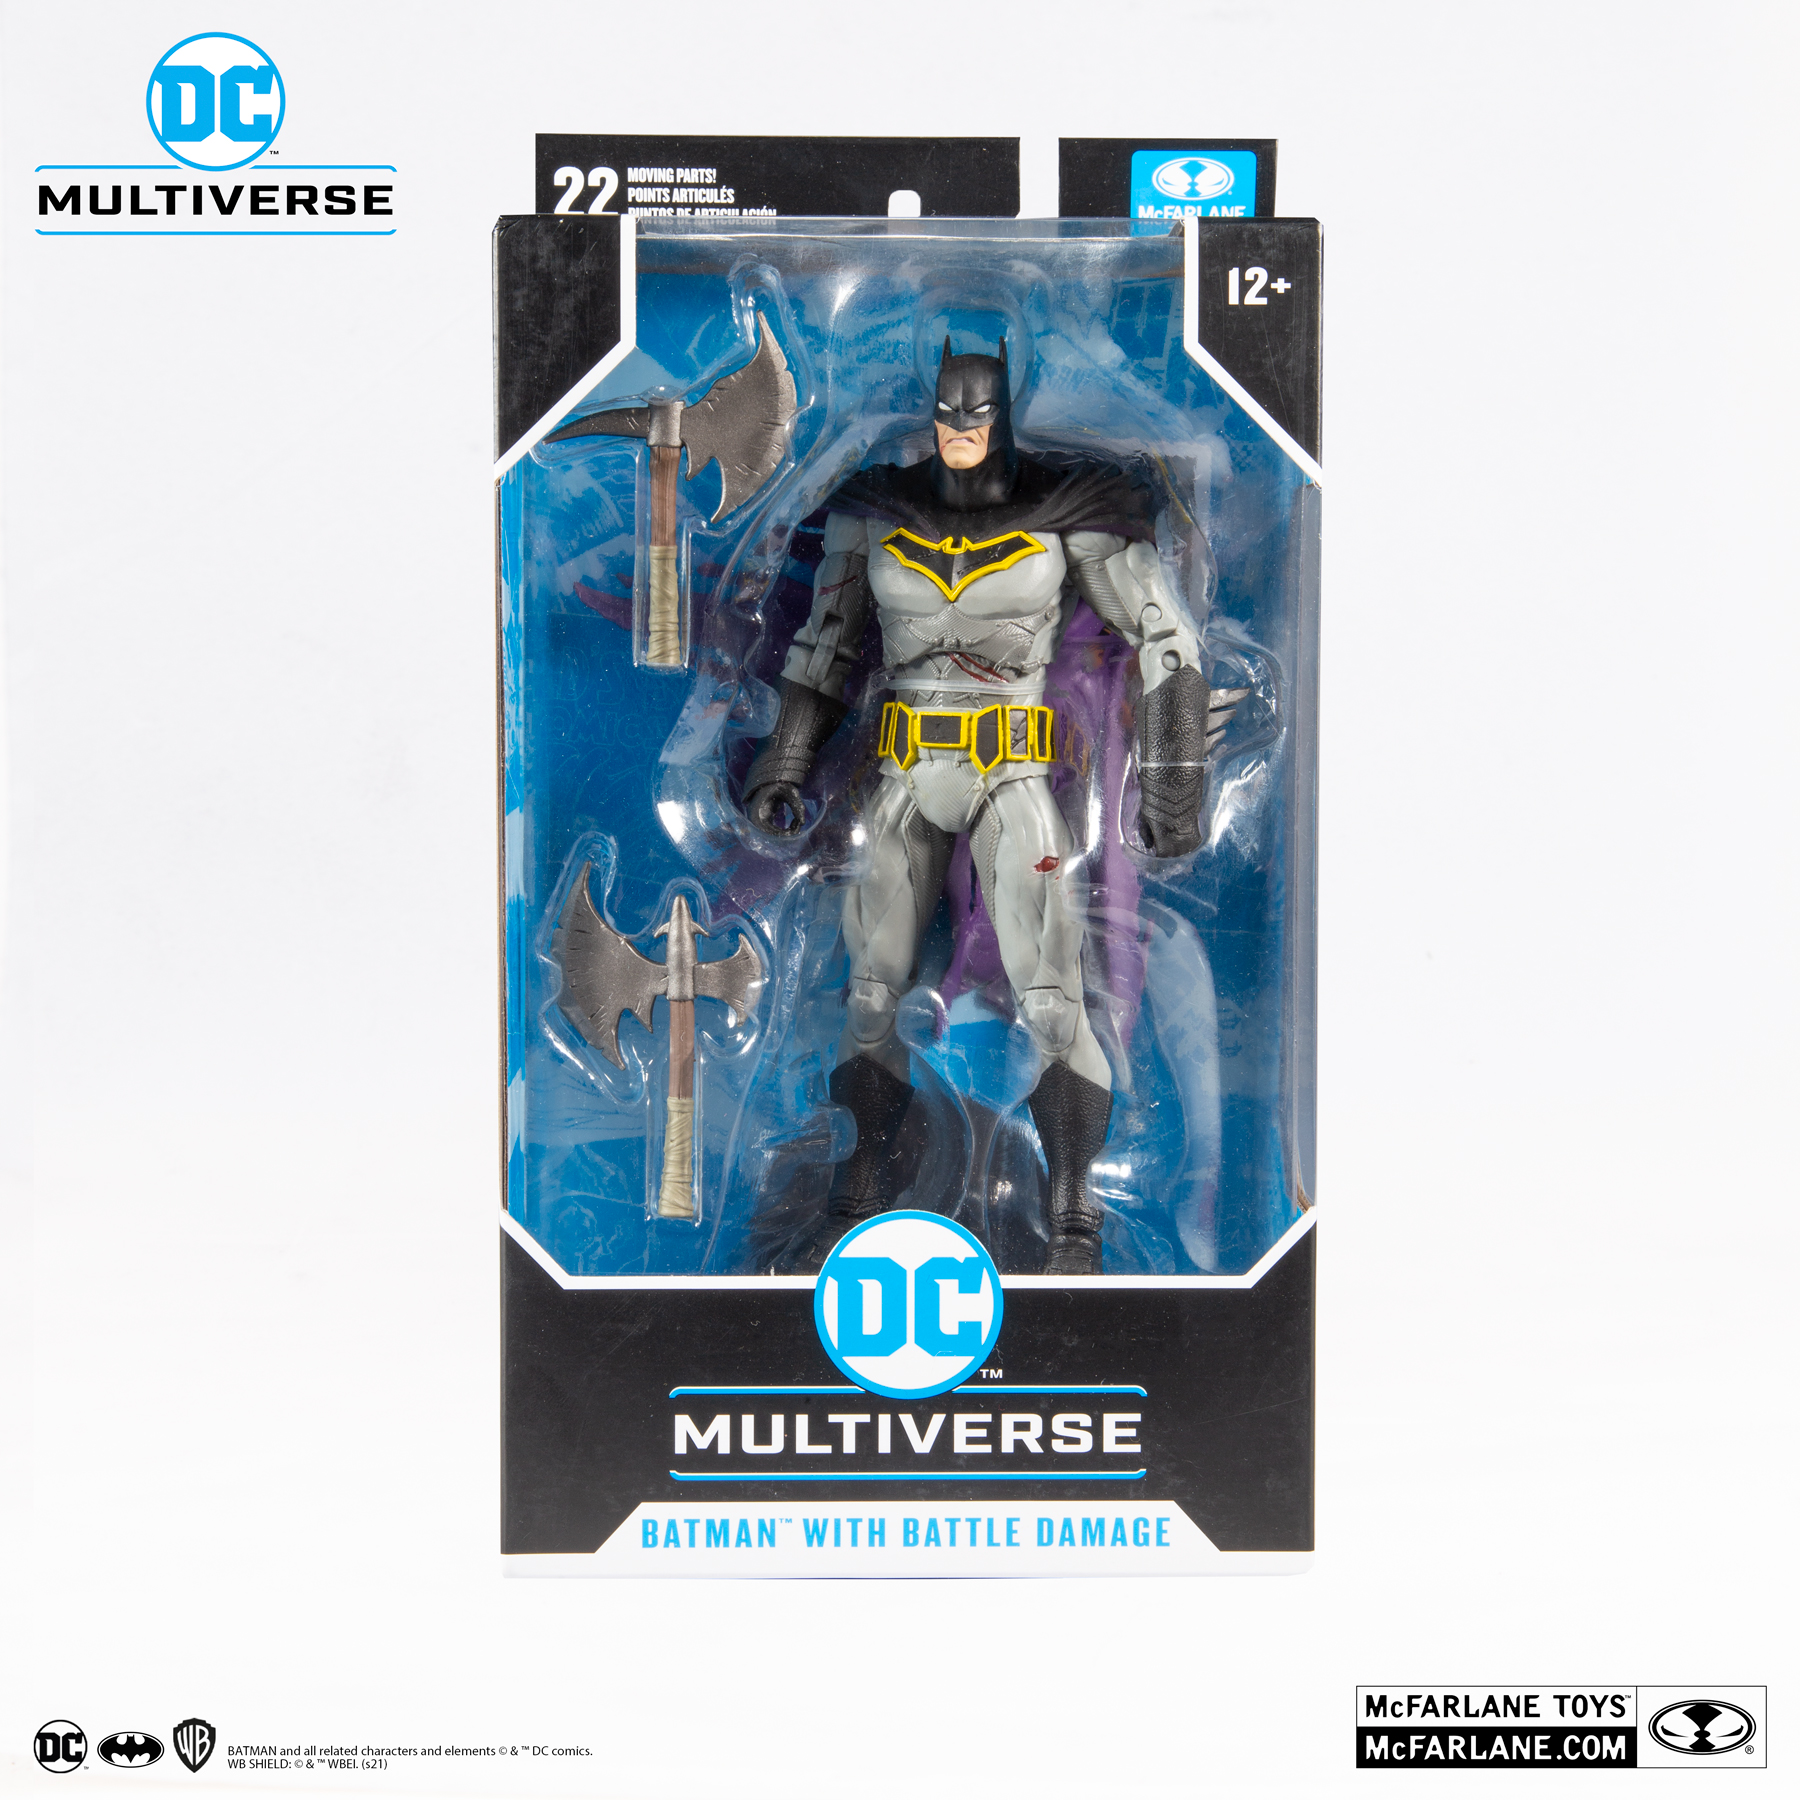 McFarlane DC Multiversum dunkle Nächte Metall-Batman mit Battle Damage lagernd